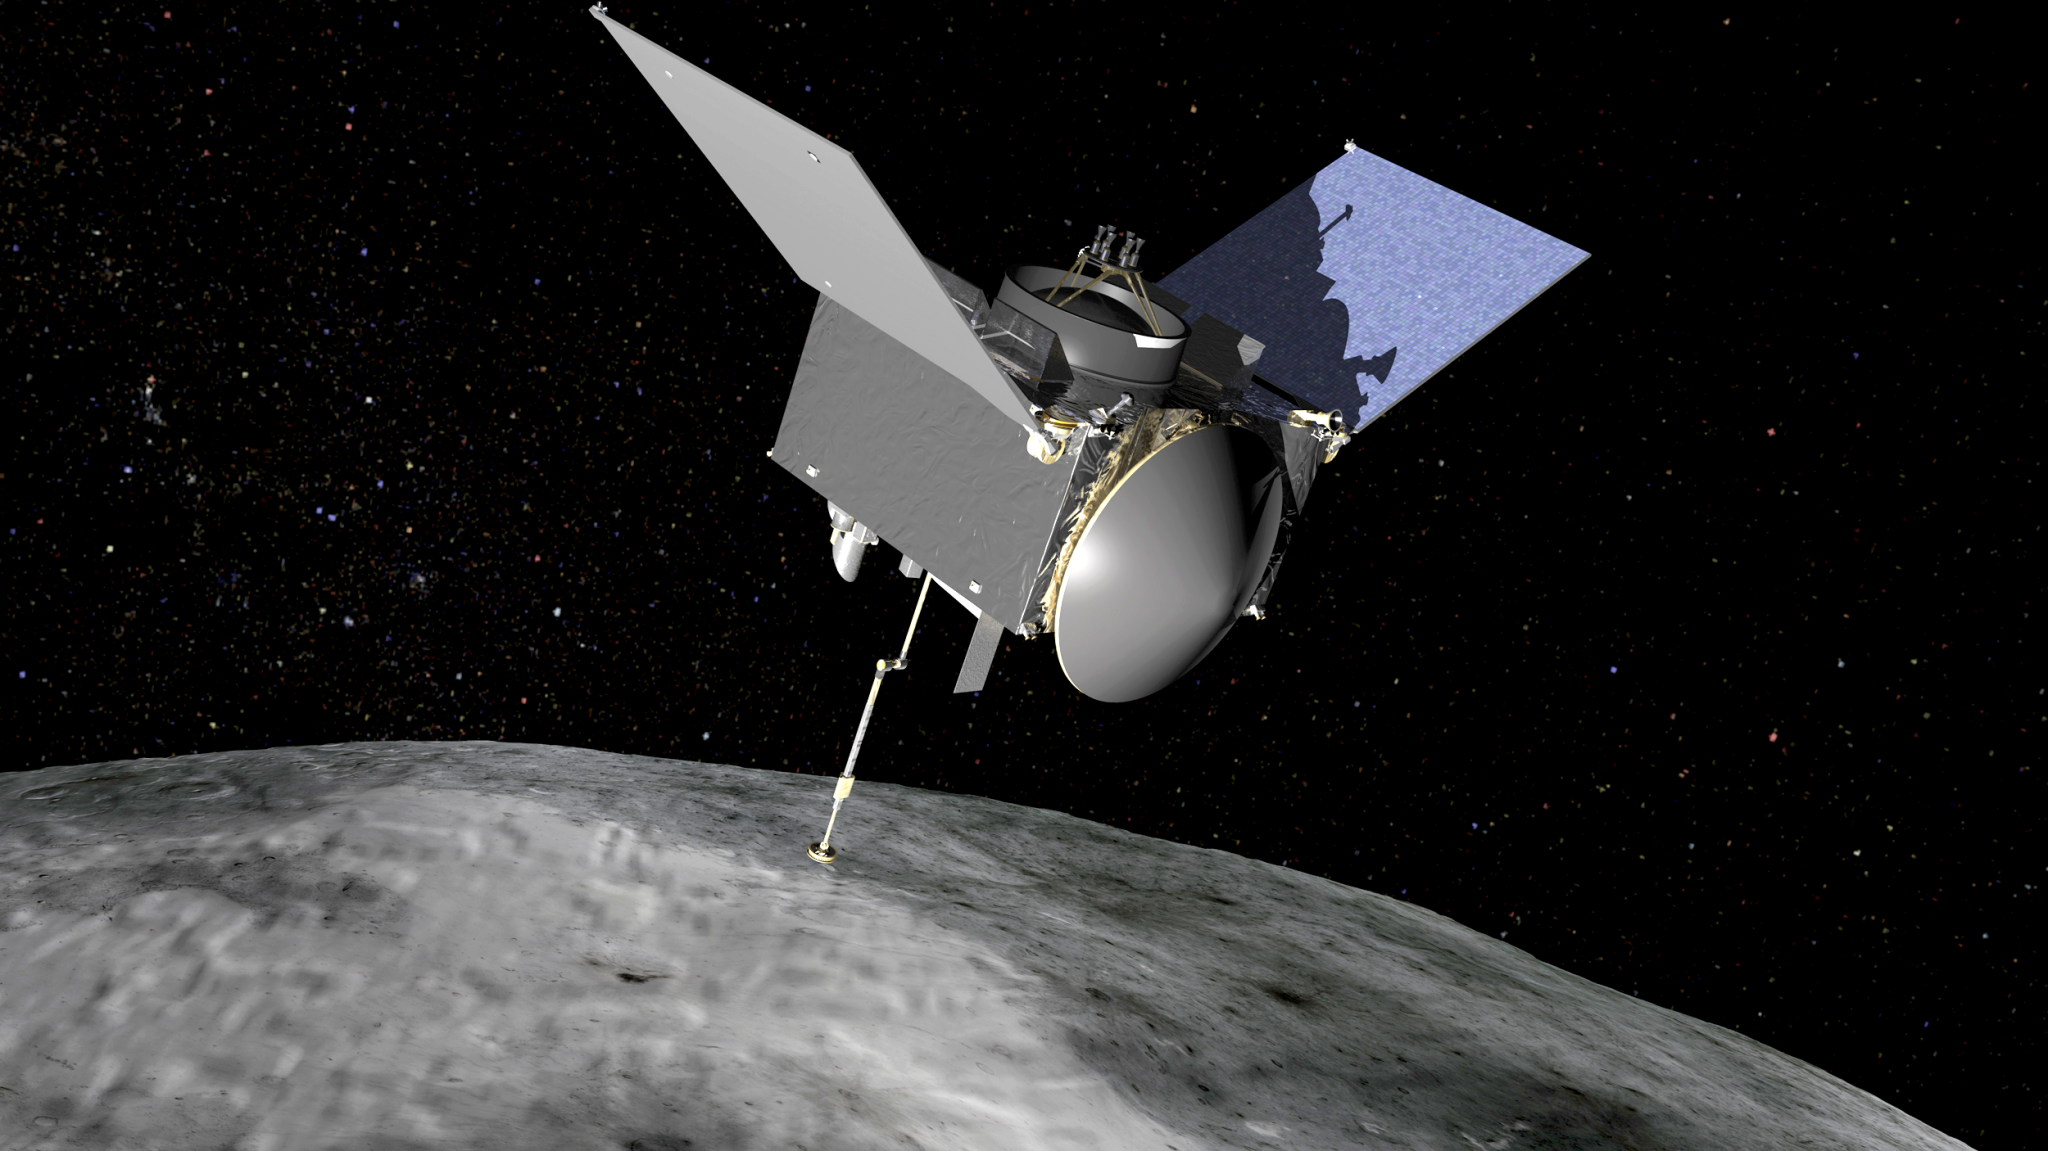 Artist’s conception of the OSIRIS-REx spacecraft at Bennu.